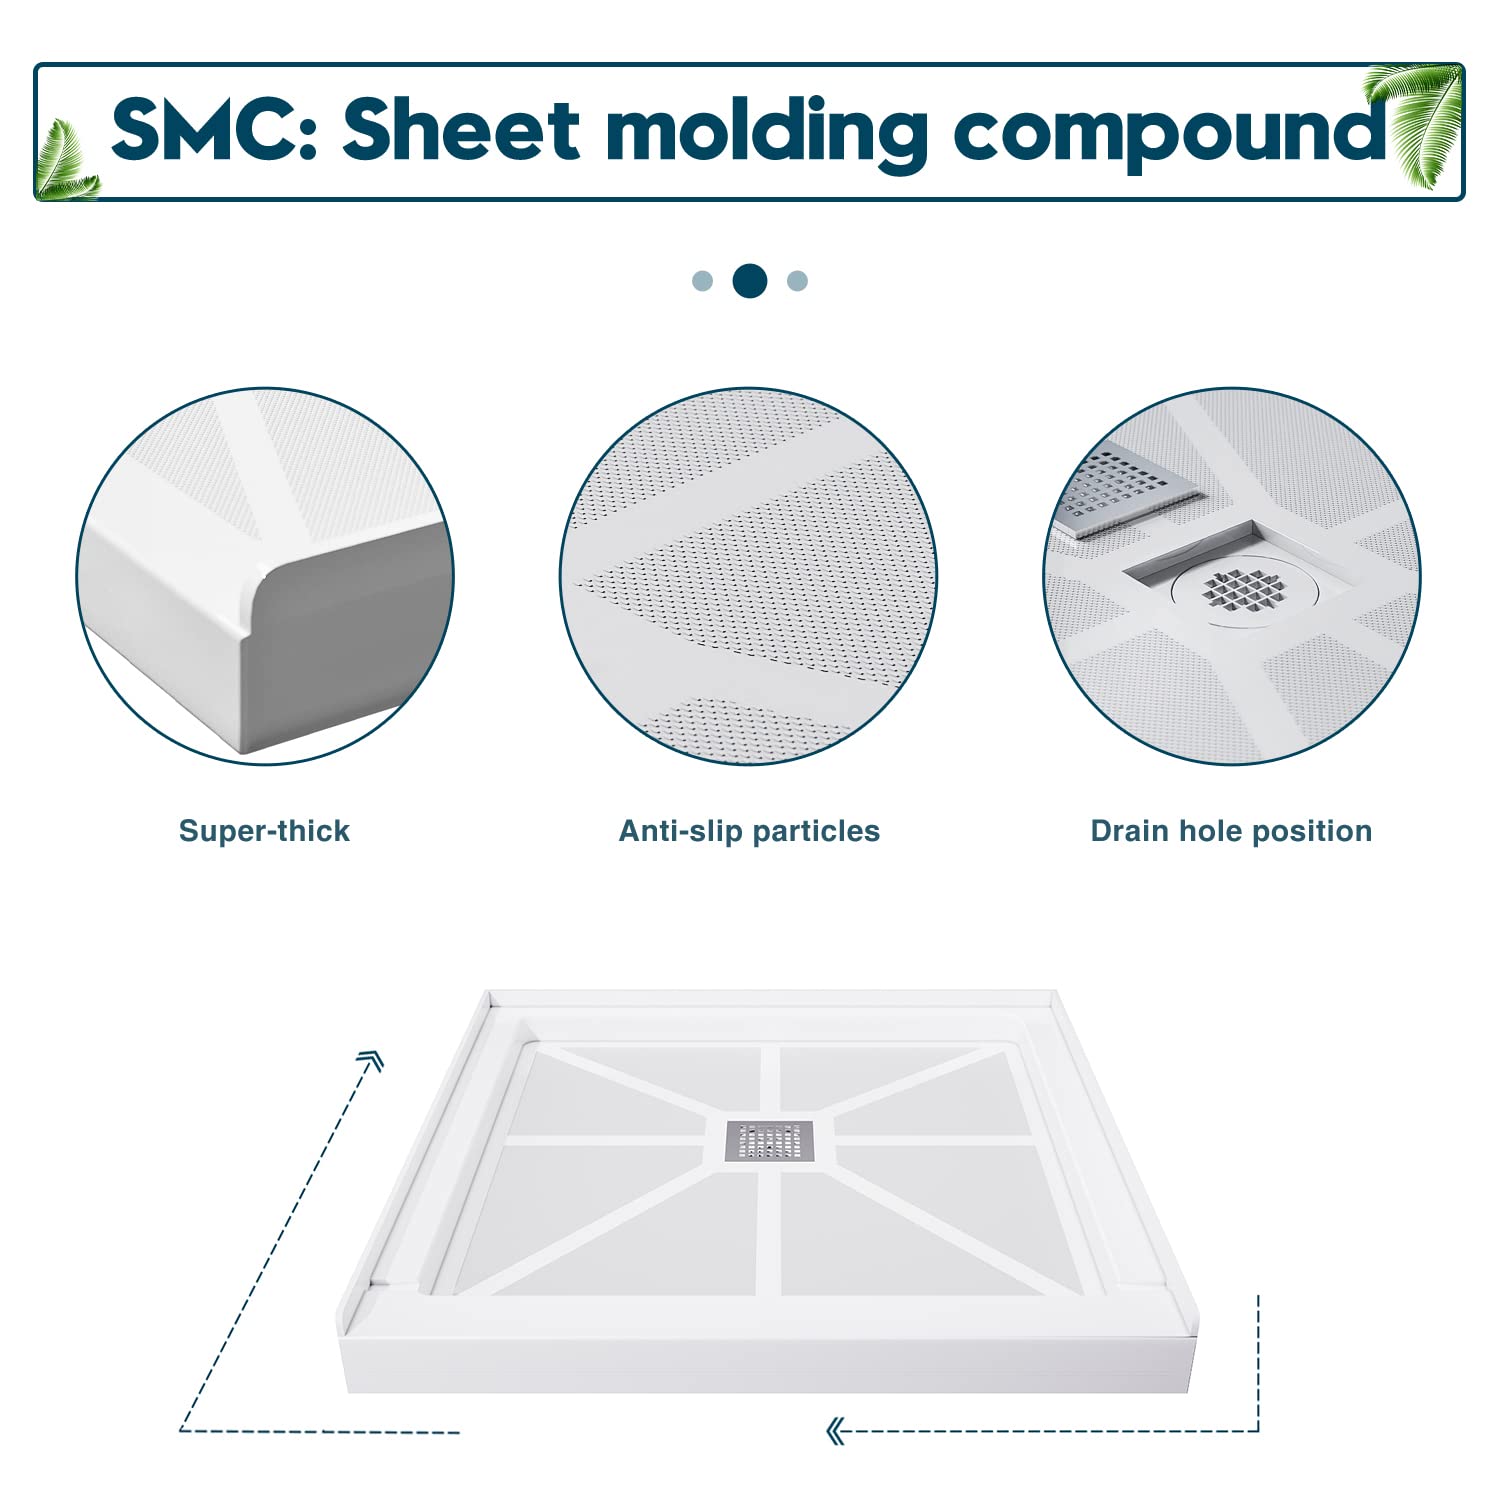 SMC: Sheet molding compound; Super-thick, Anti-slip-particles, Drain hole position